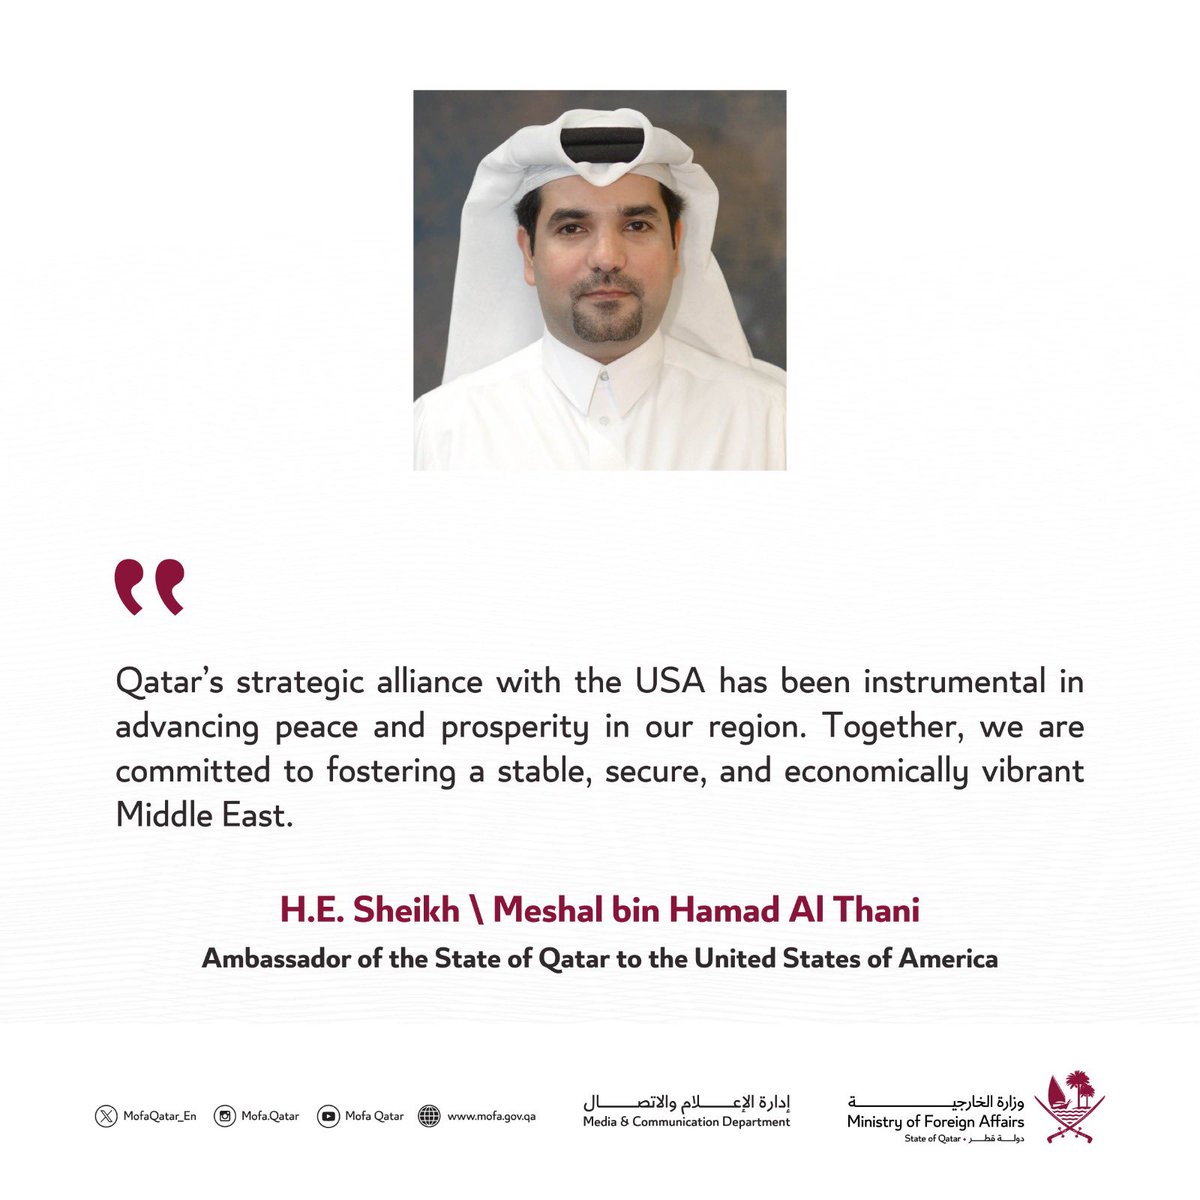 H.E. Sheikh Meshal bin Hamad Al Thani Ambassador of the State of Qatar to the United States of America #MOFAQatar